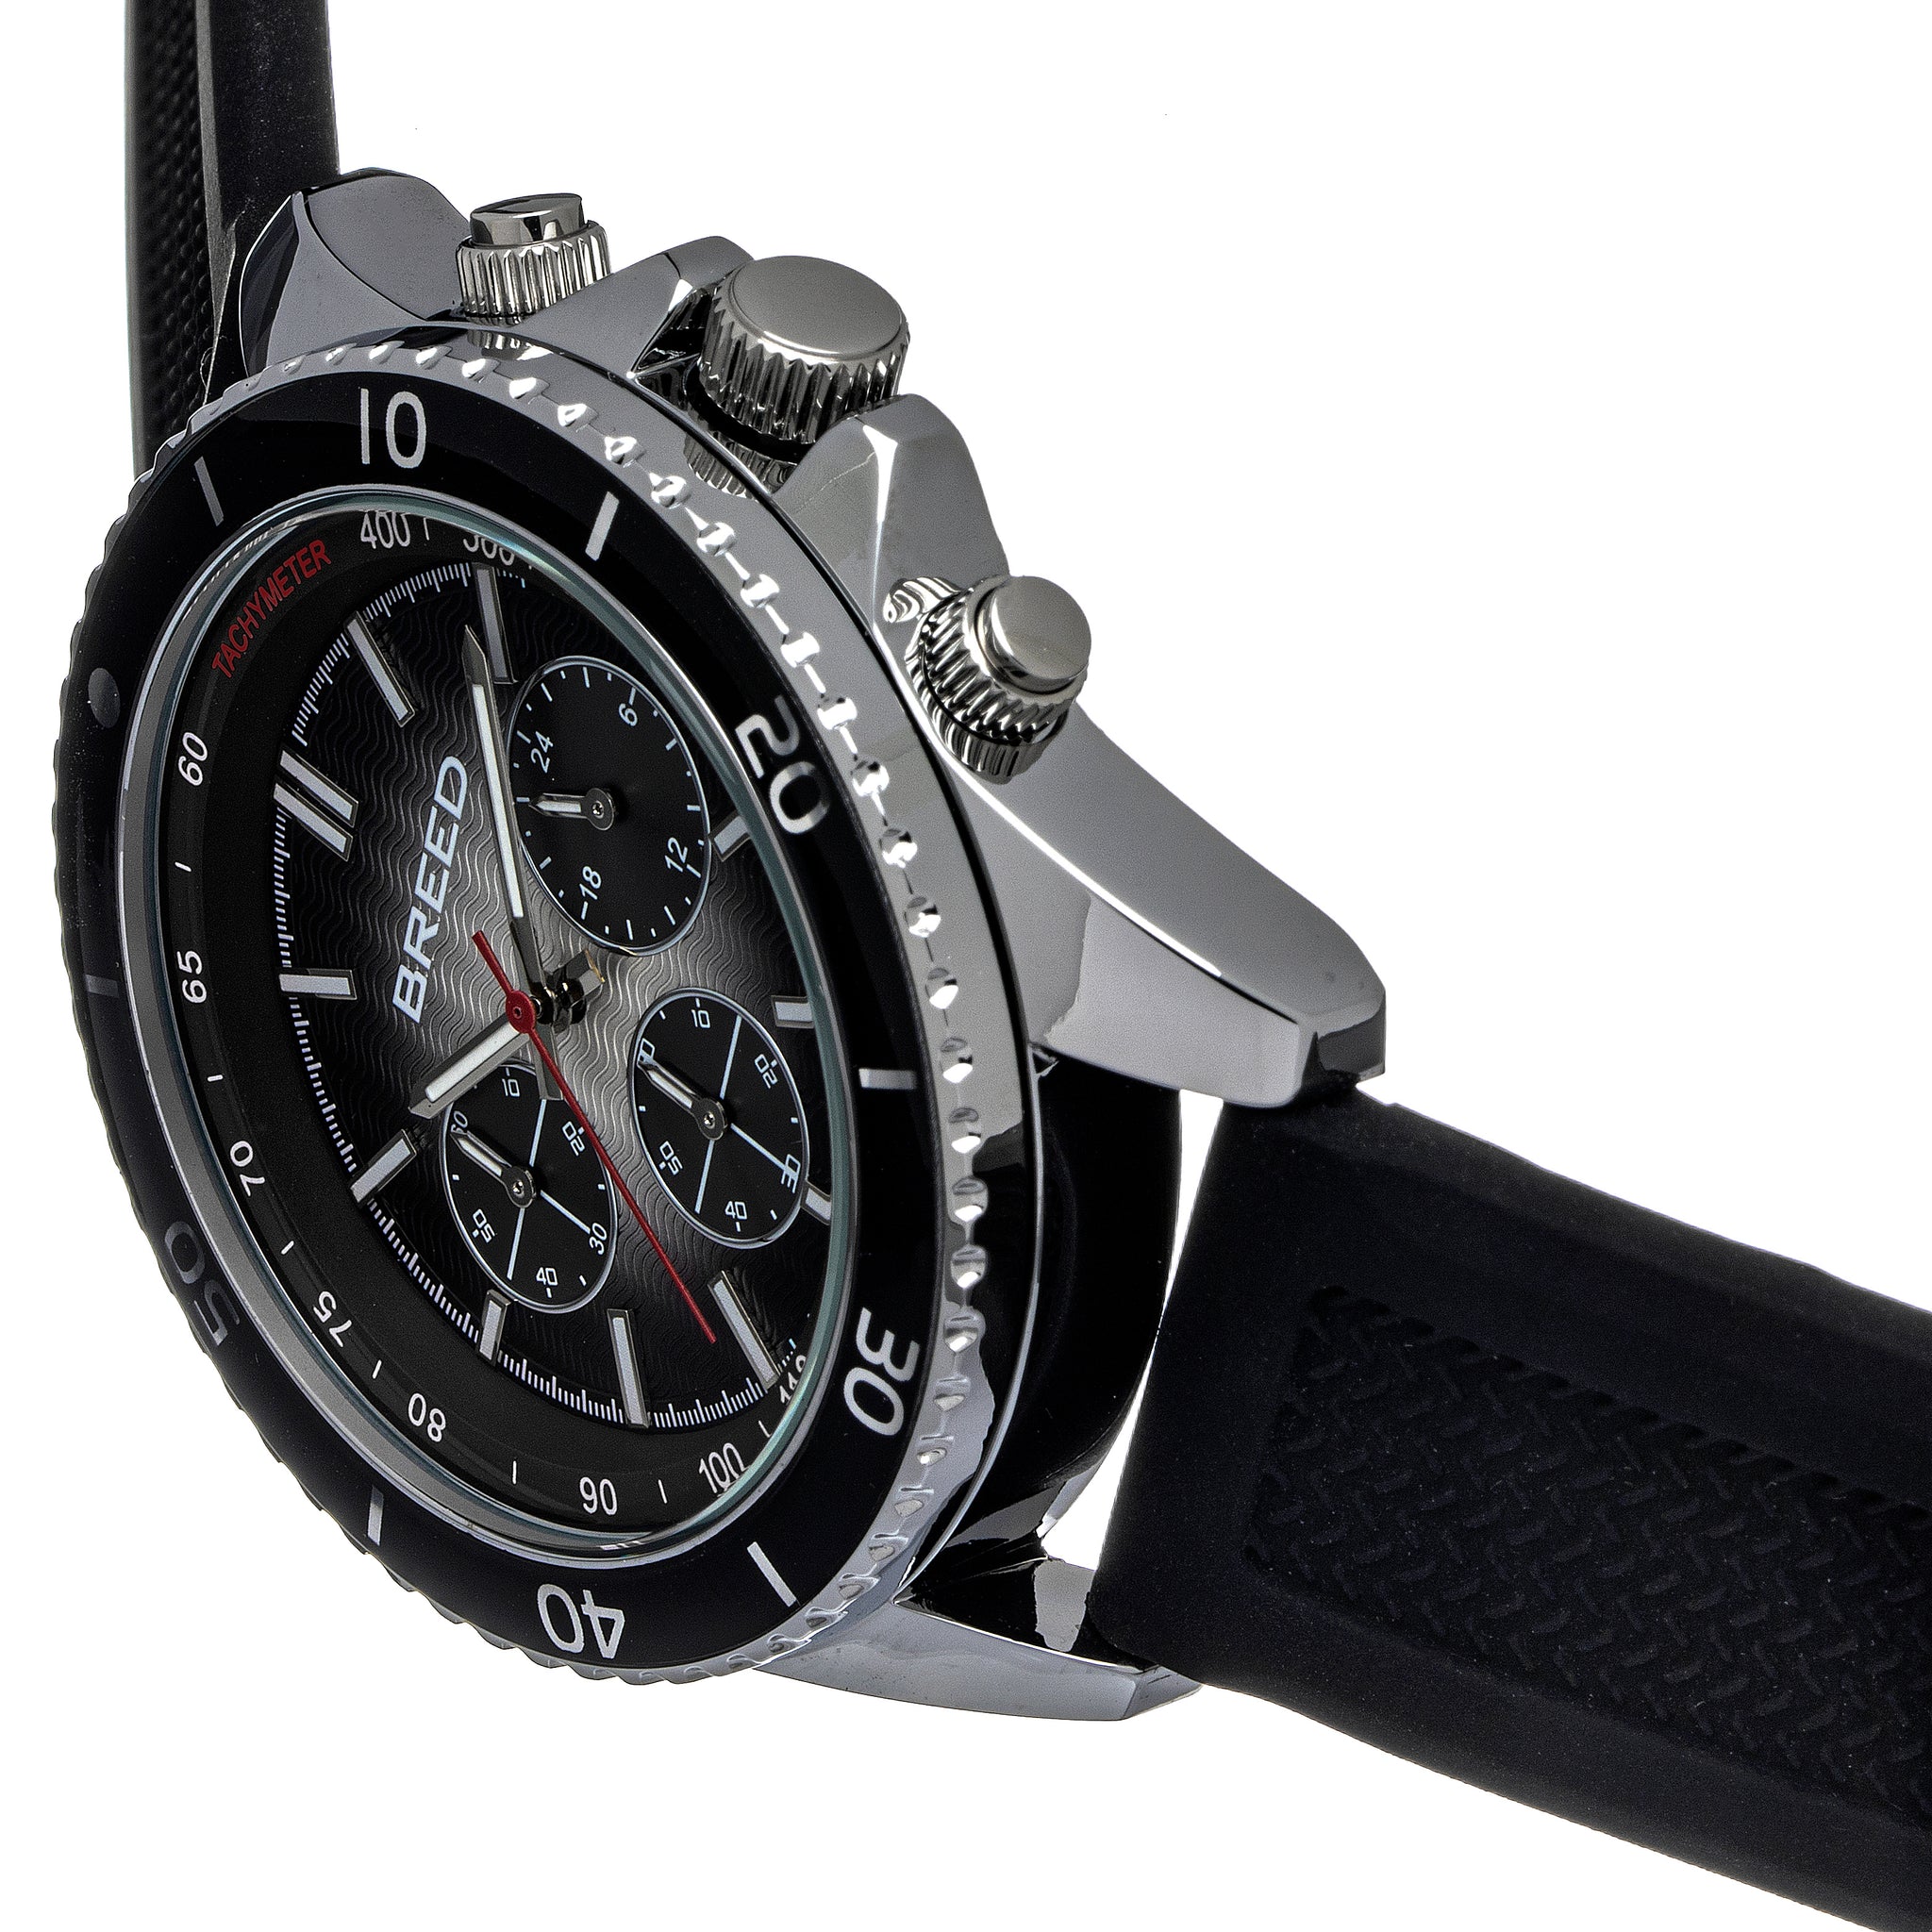 Breed Tempo Chronograph Strap Watch - Black - BRD9103